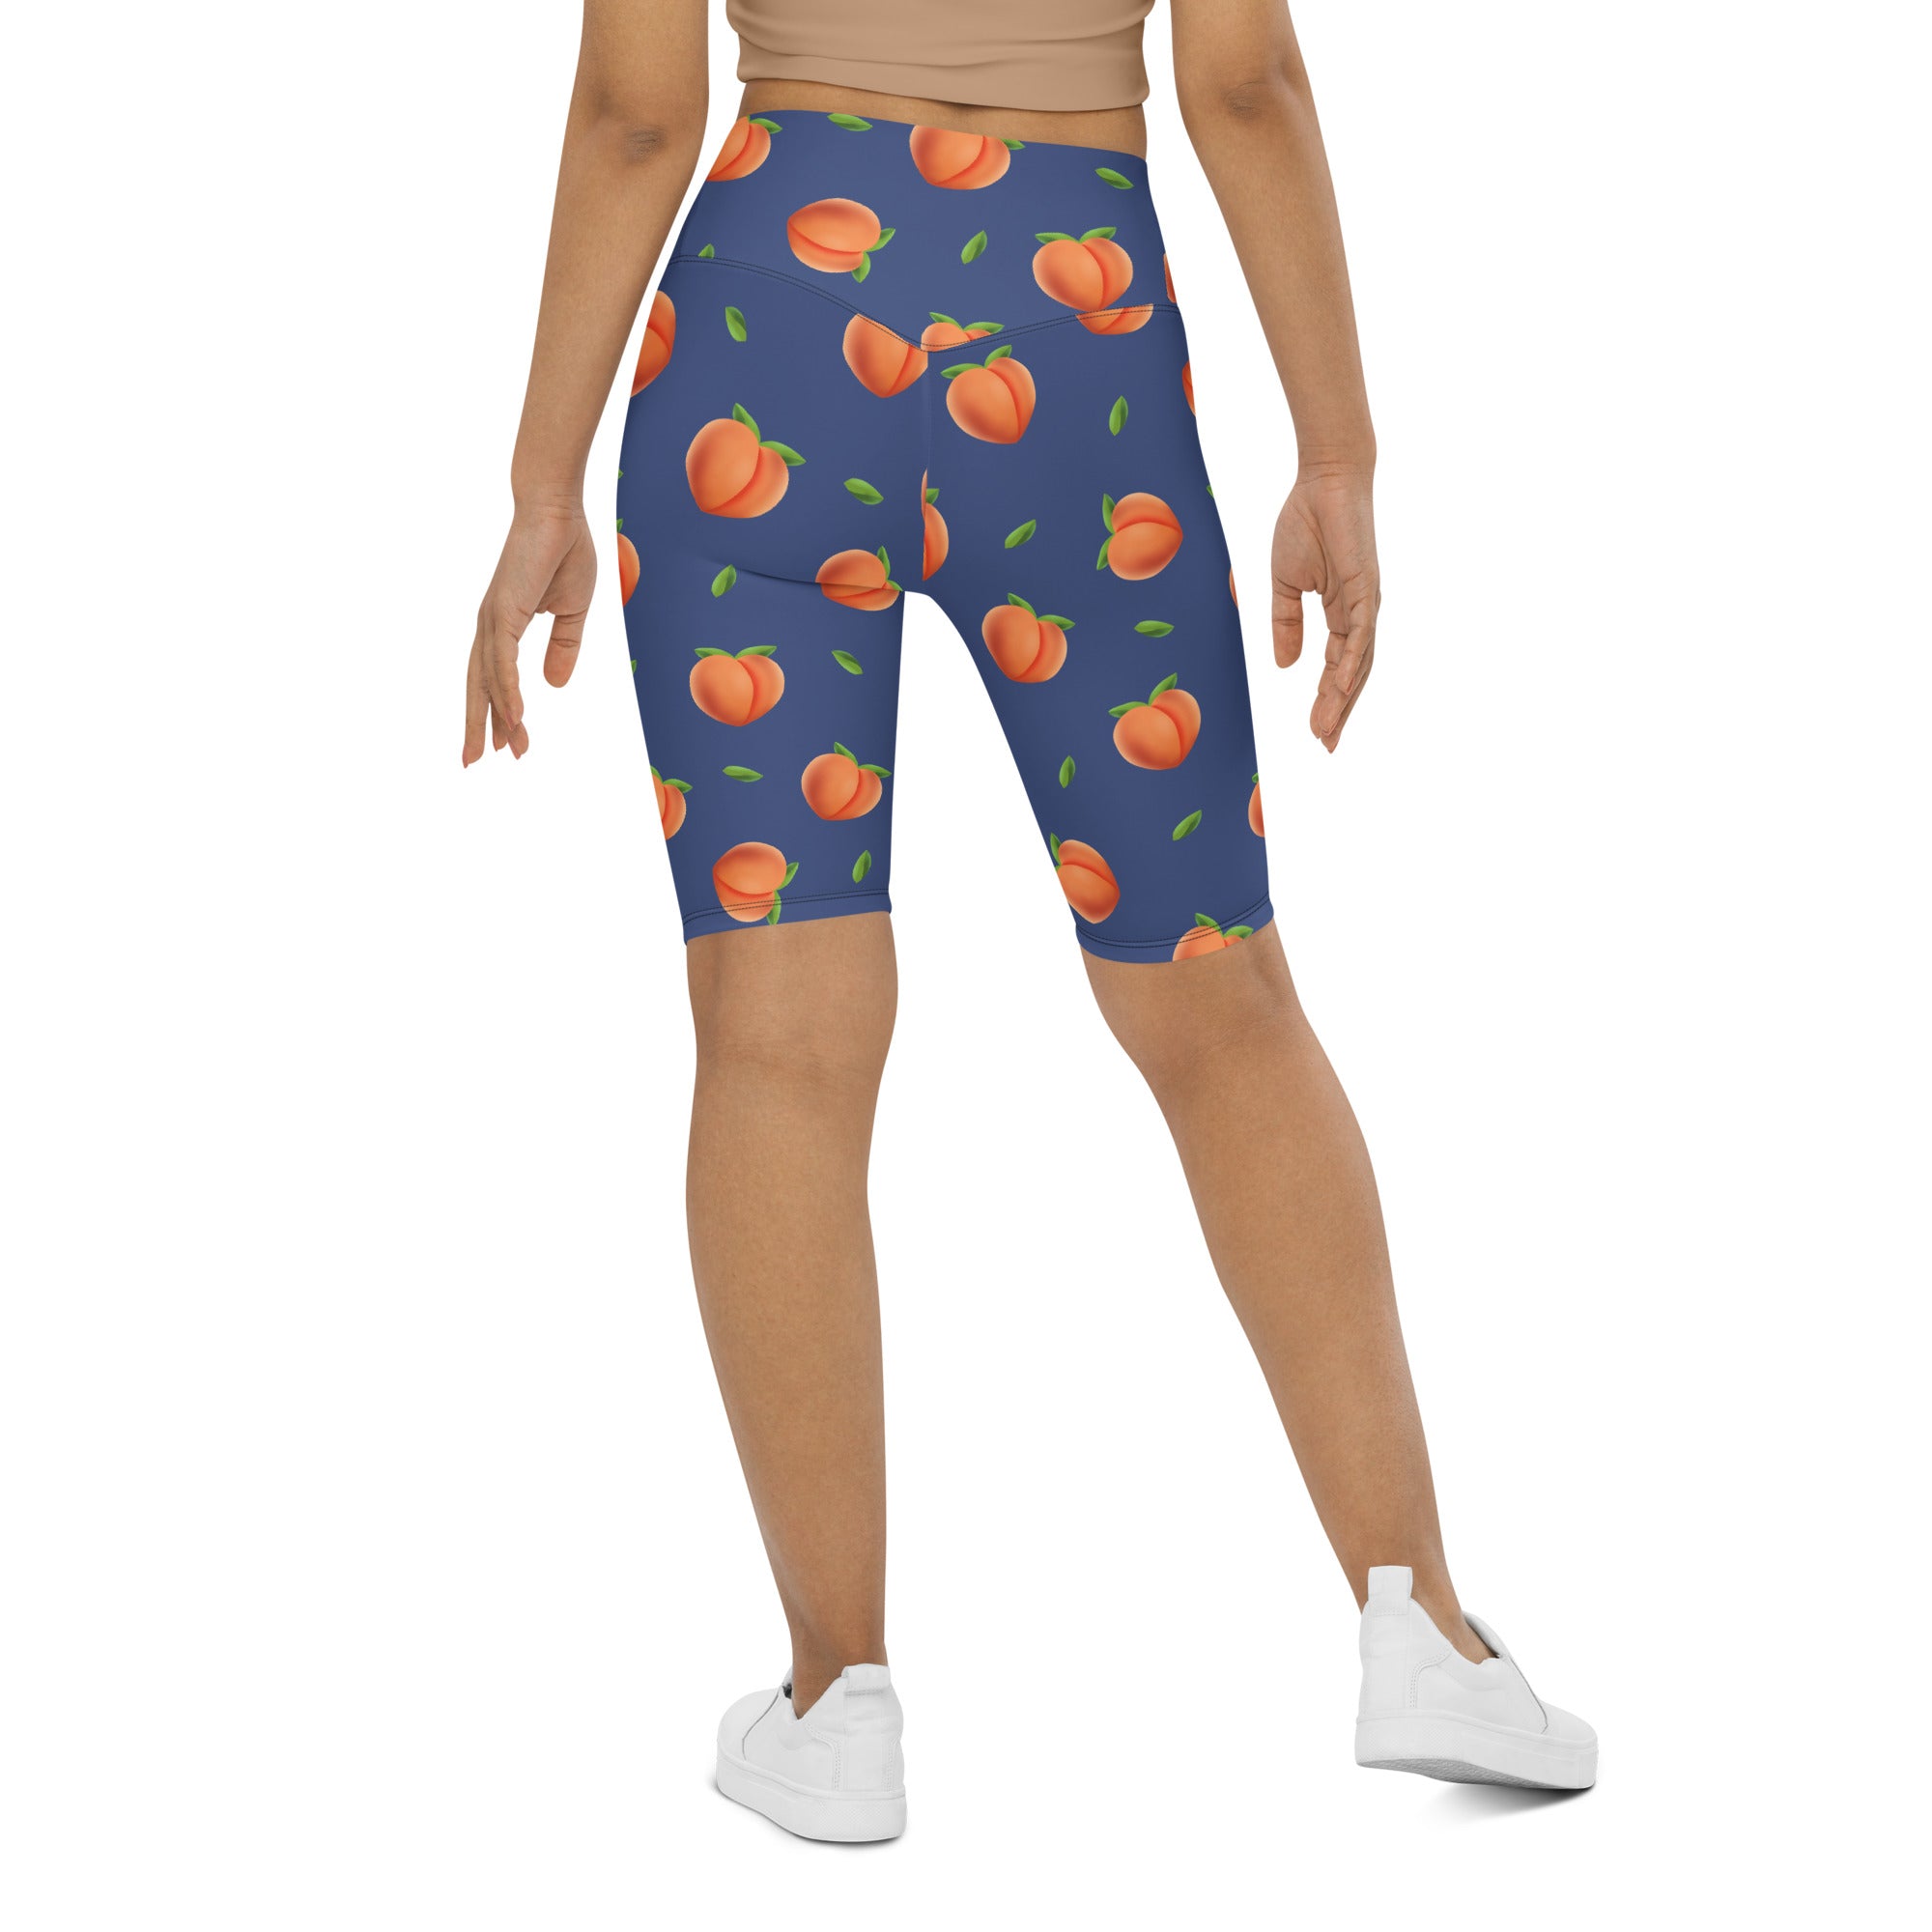 Peachy Biker Shorts